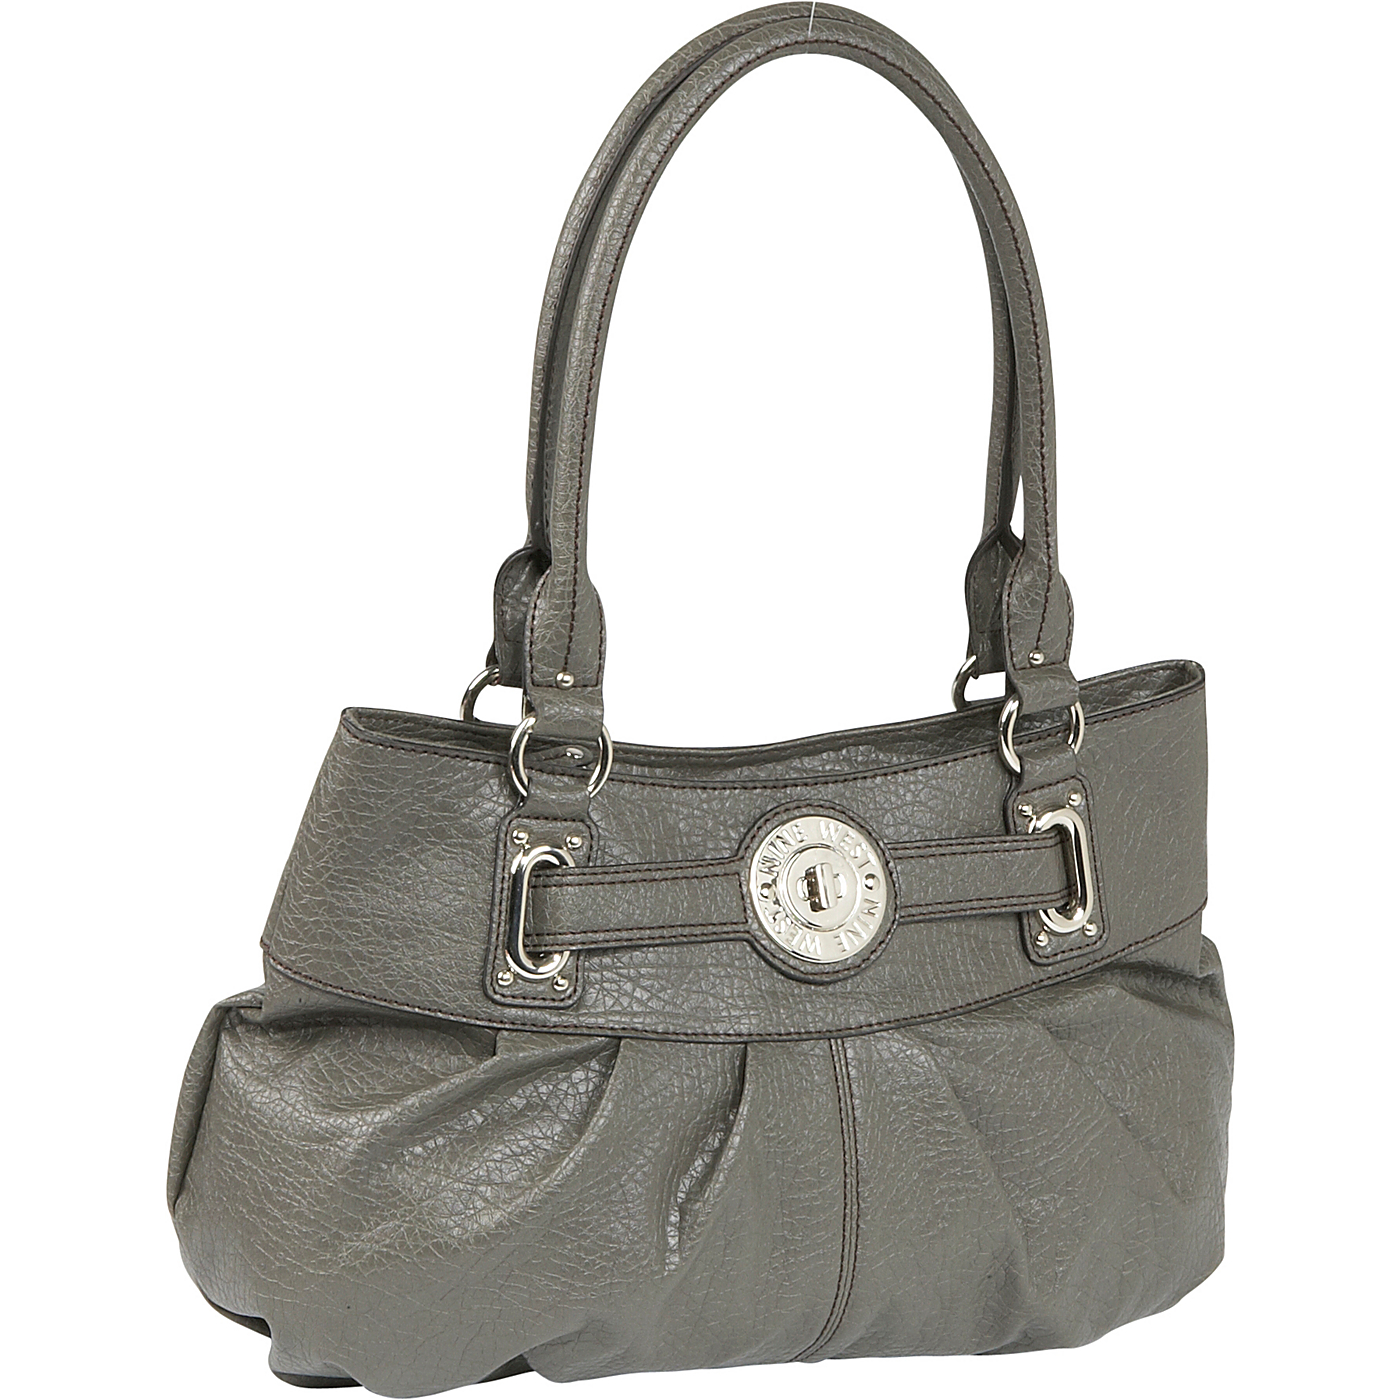 Nine West Handbags Lady Lock Medium Shopper   